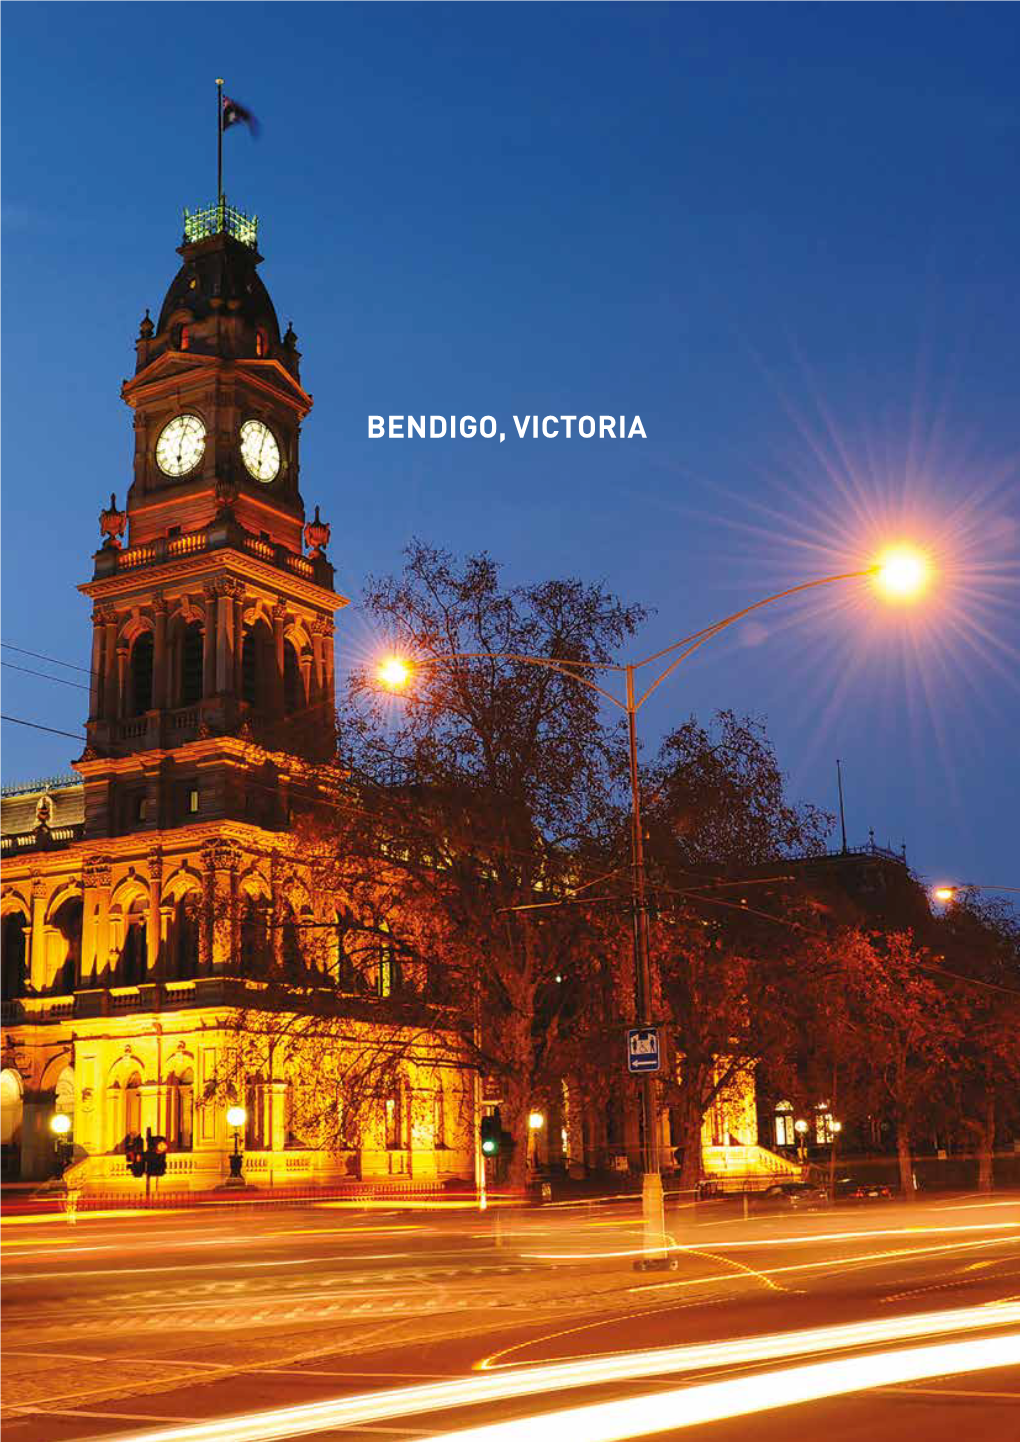 Bendigo, Victoria